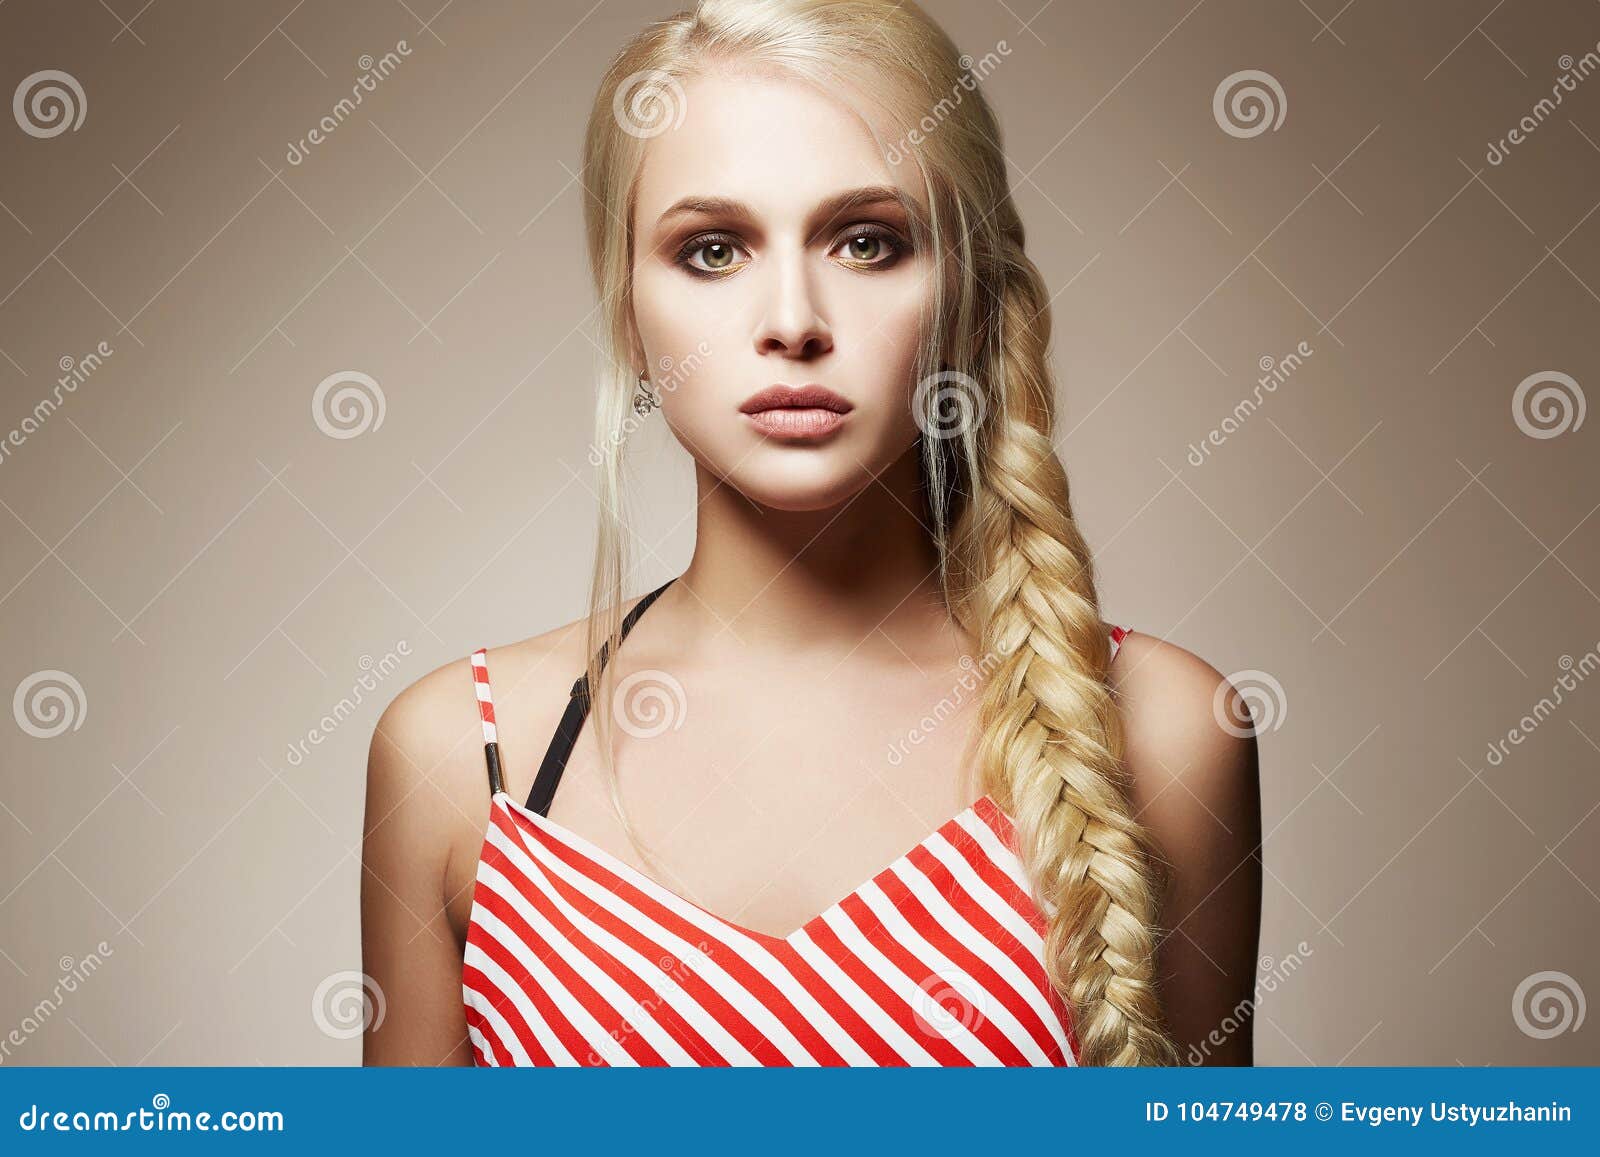 blonde braided hair wigs